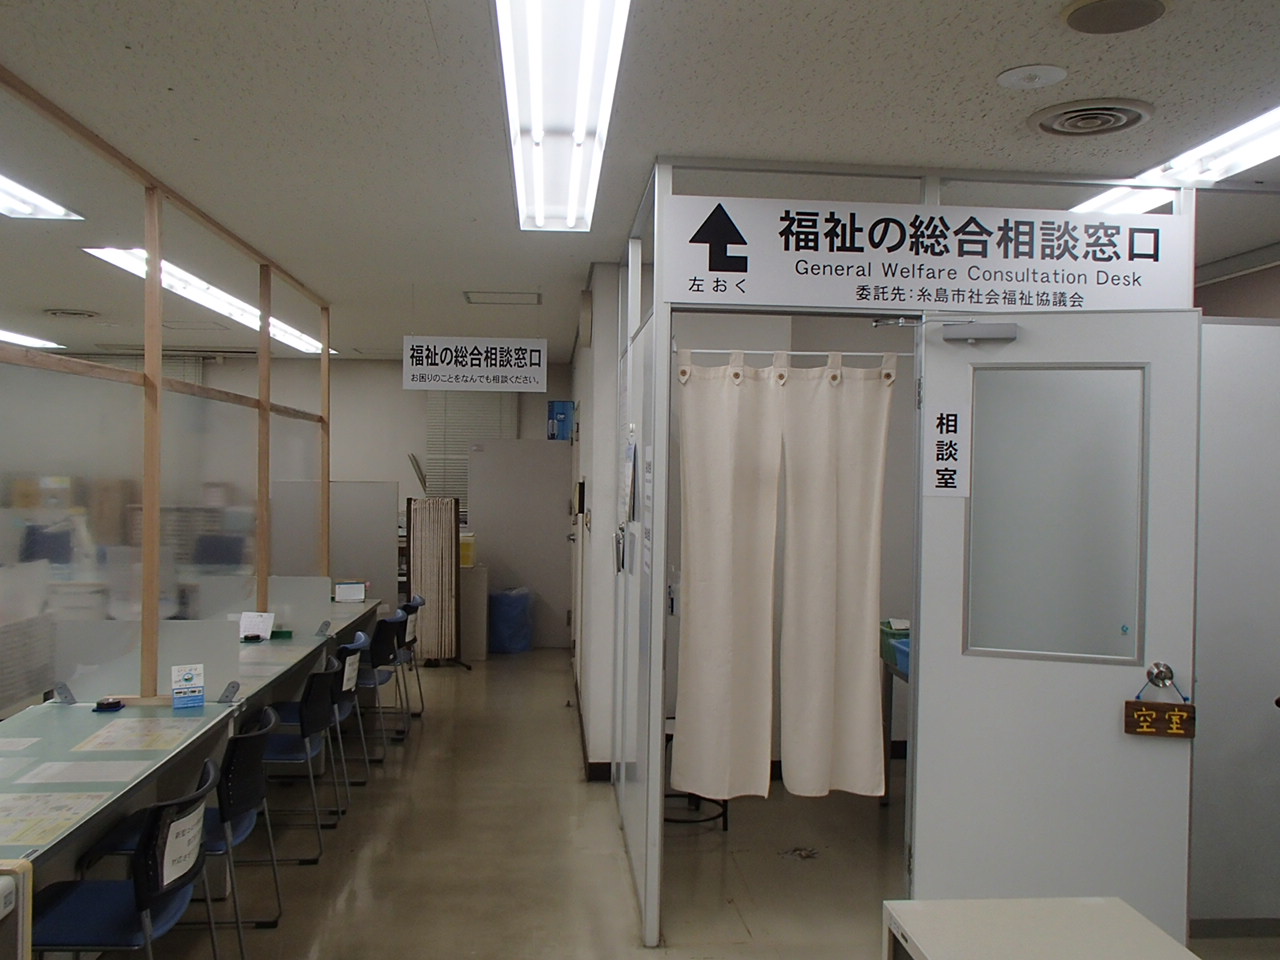 糸島市　福祉の総合相談窓口の画像